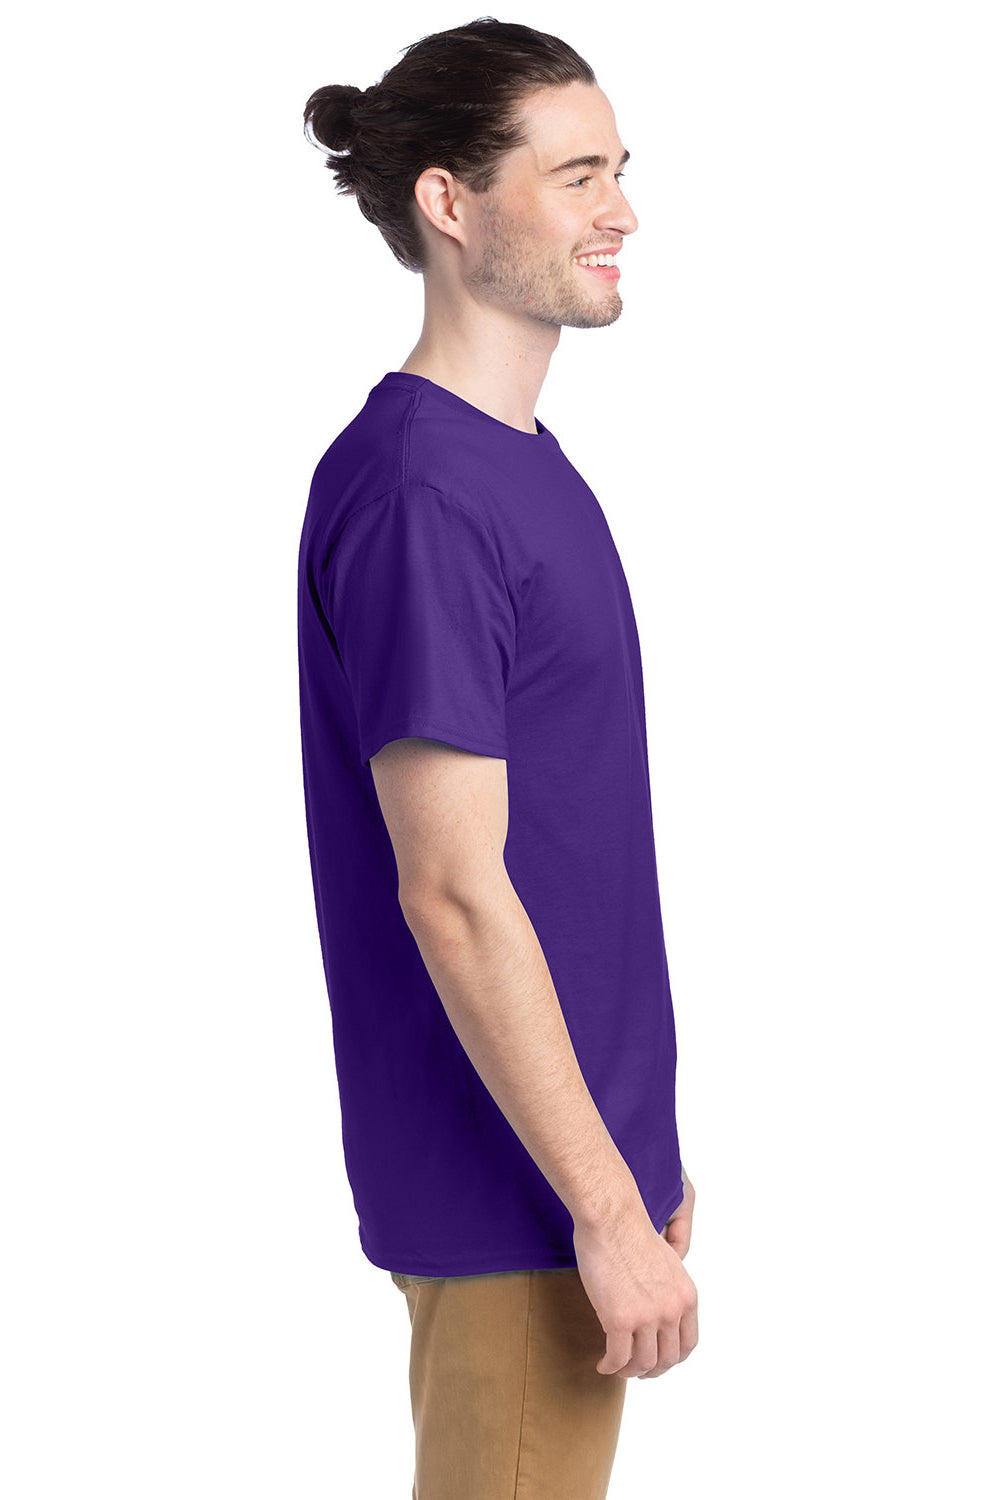 Hanes 5280 Mens ComfortSoft Short Sleeve Crewneck T-Shirt Athletic Purple SIde